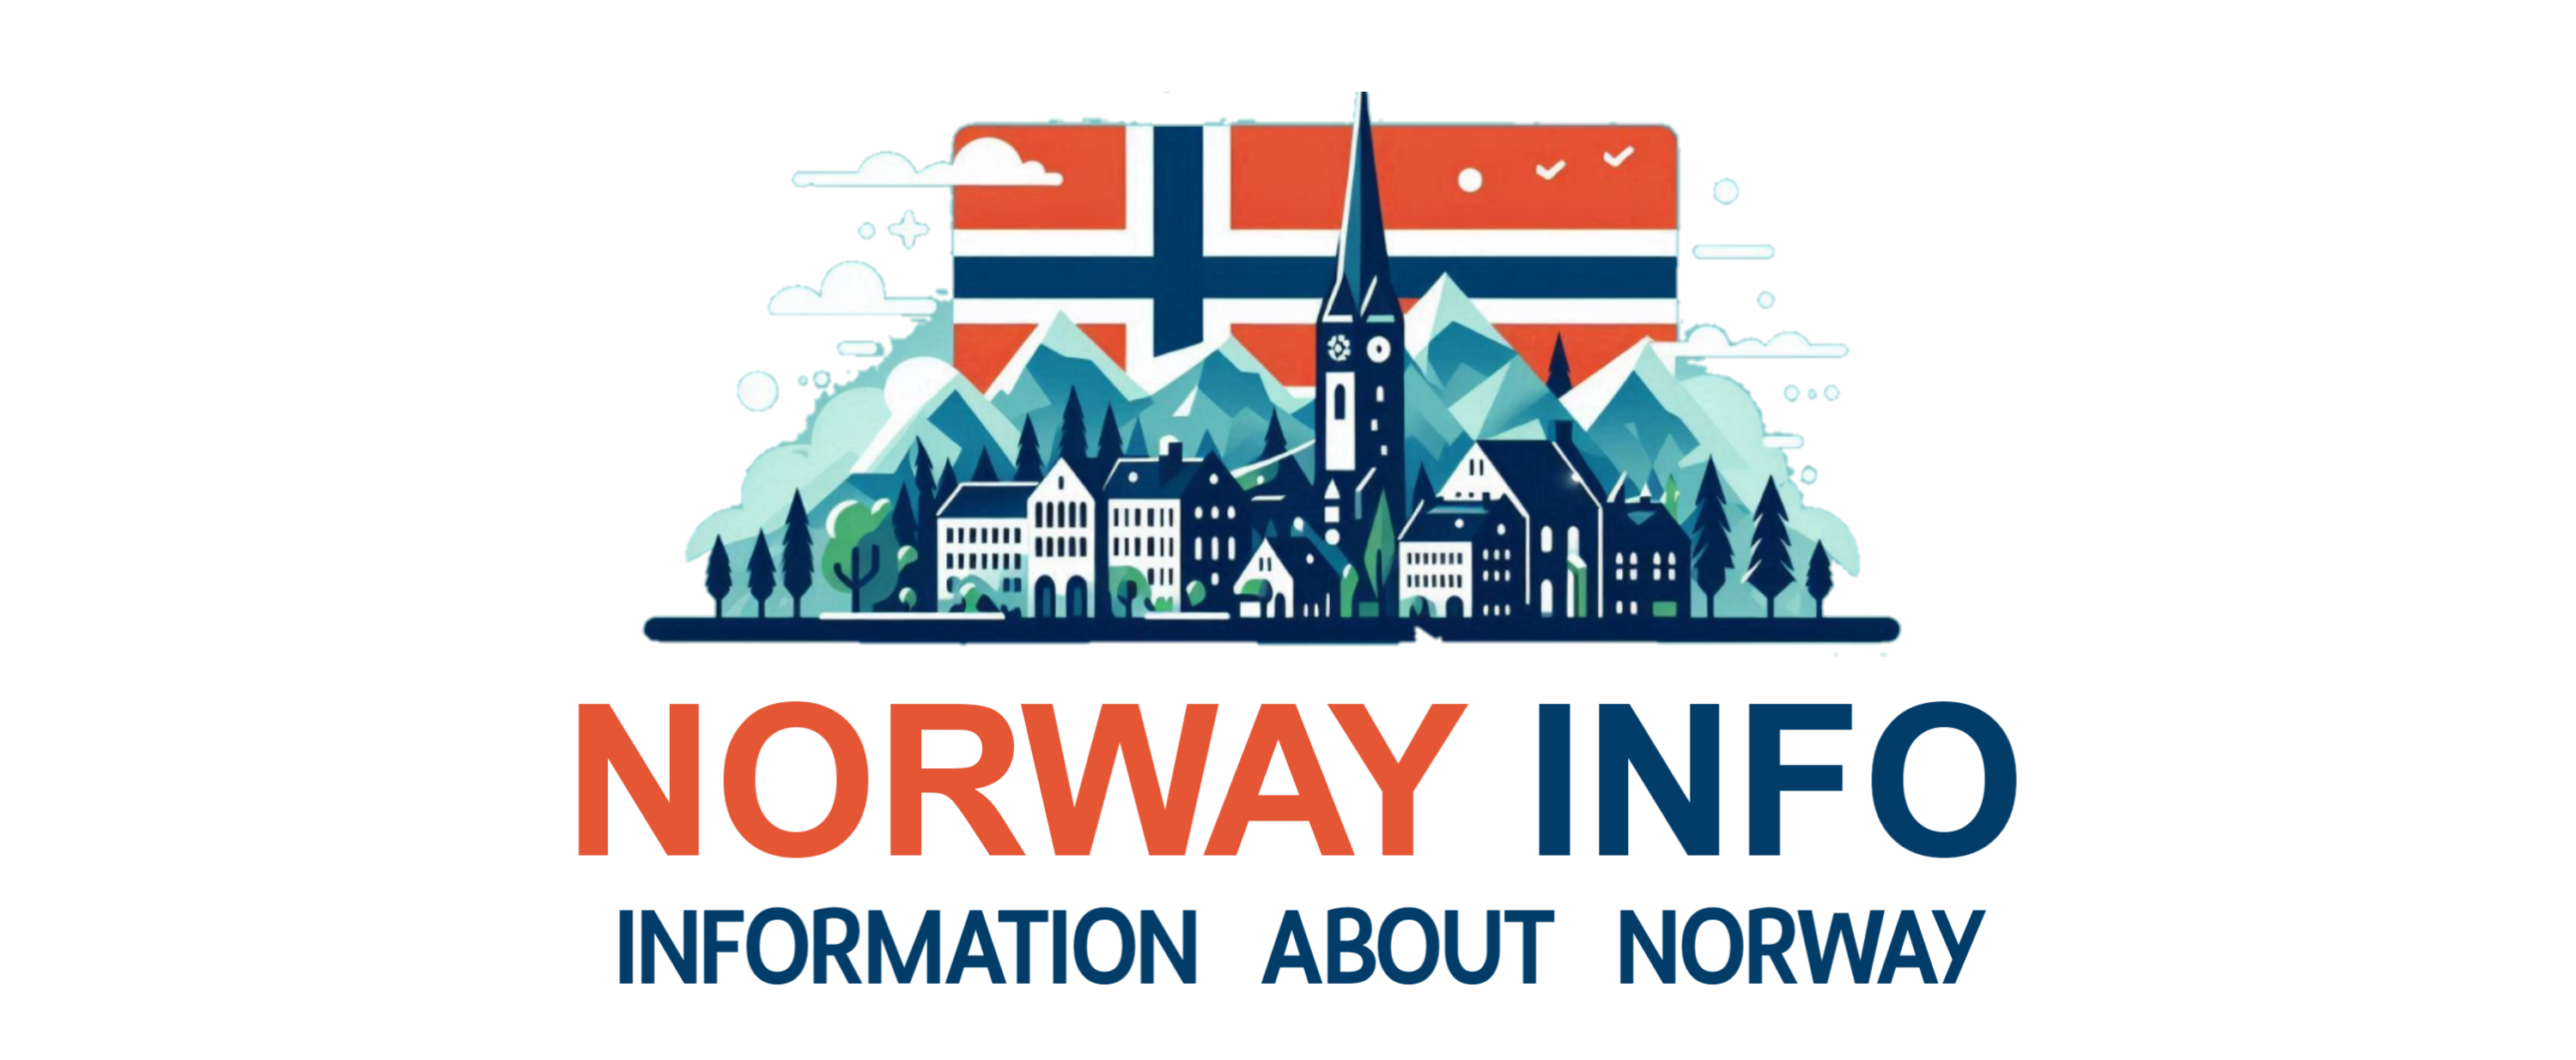 NORWAY INFO